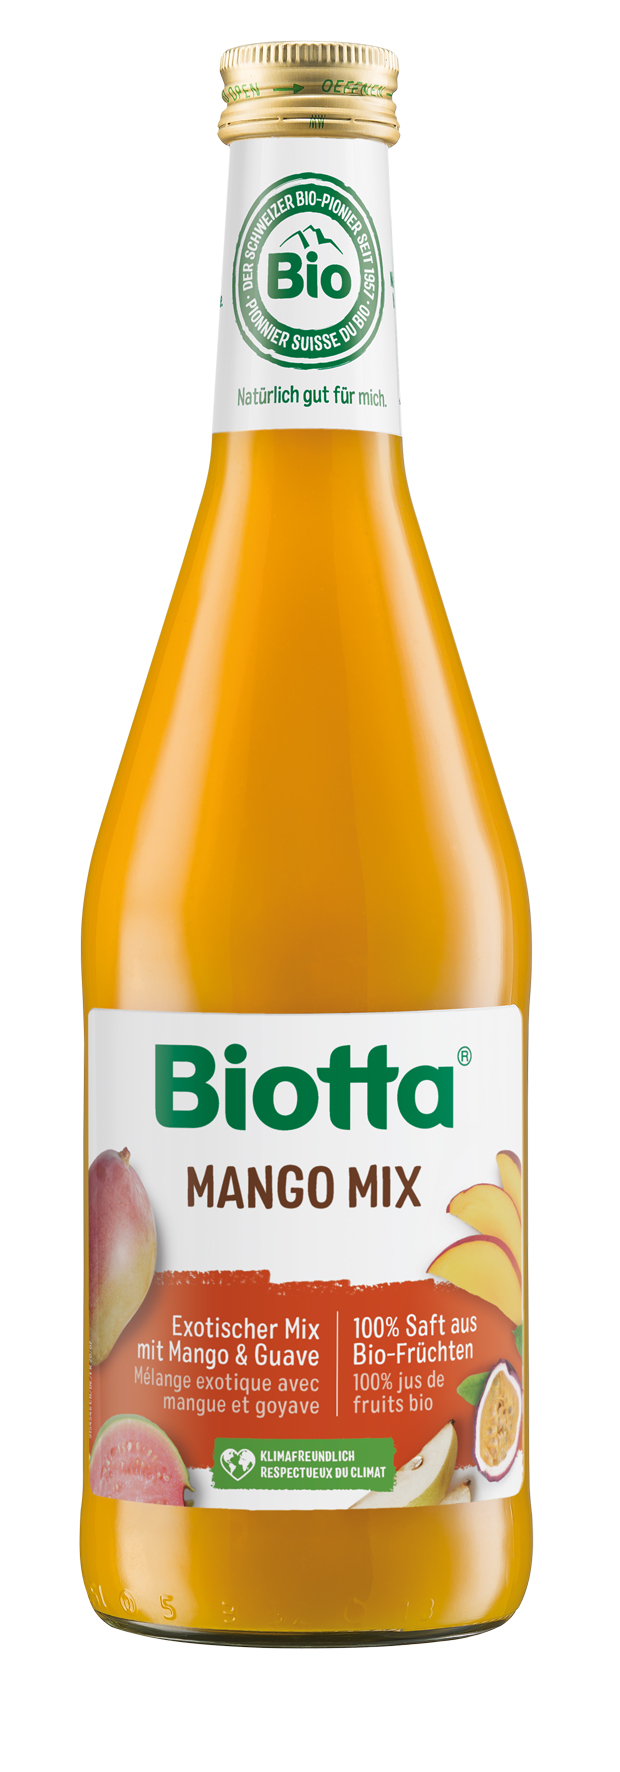 Biotta Mangue mix bio 500ml